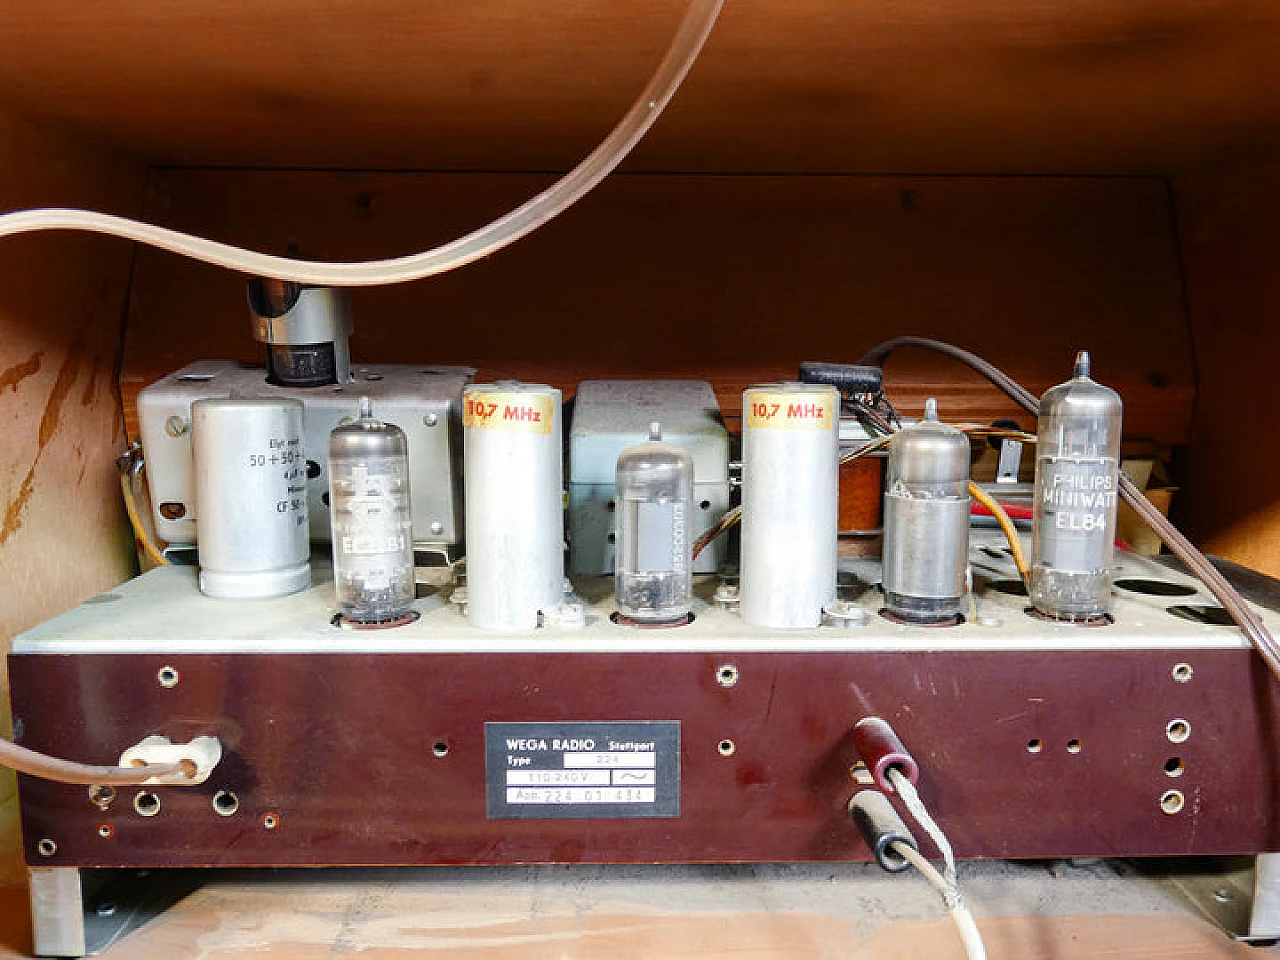 Wega 224 radio cabinet with turntable, 1960s 18